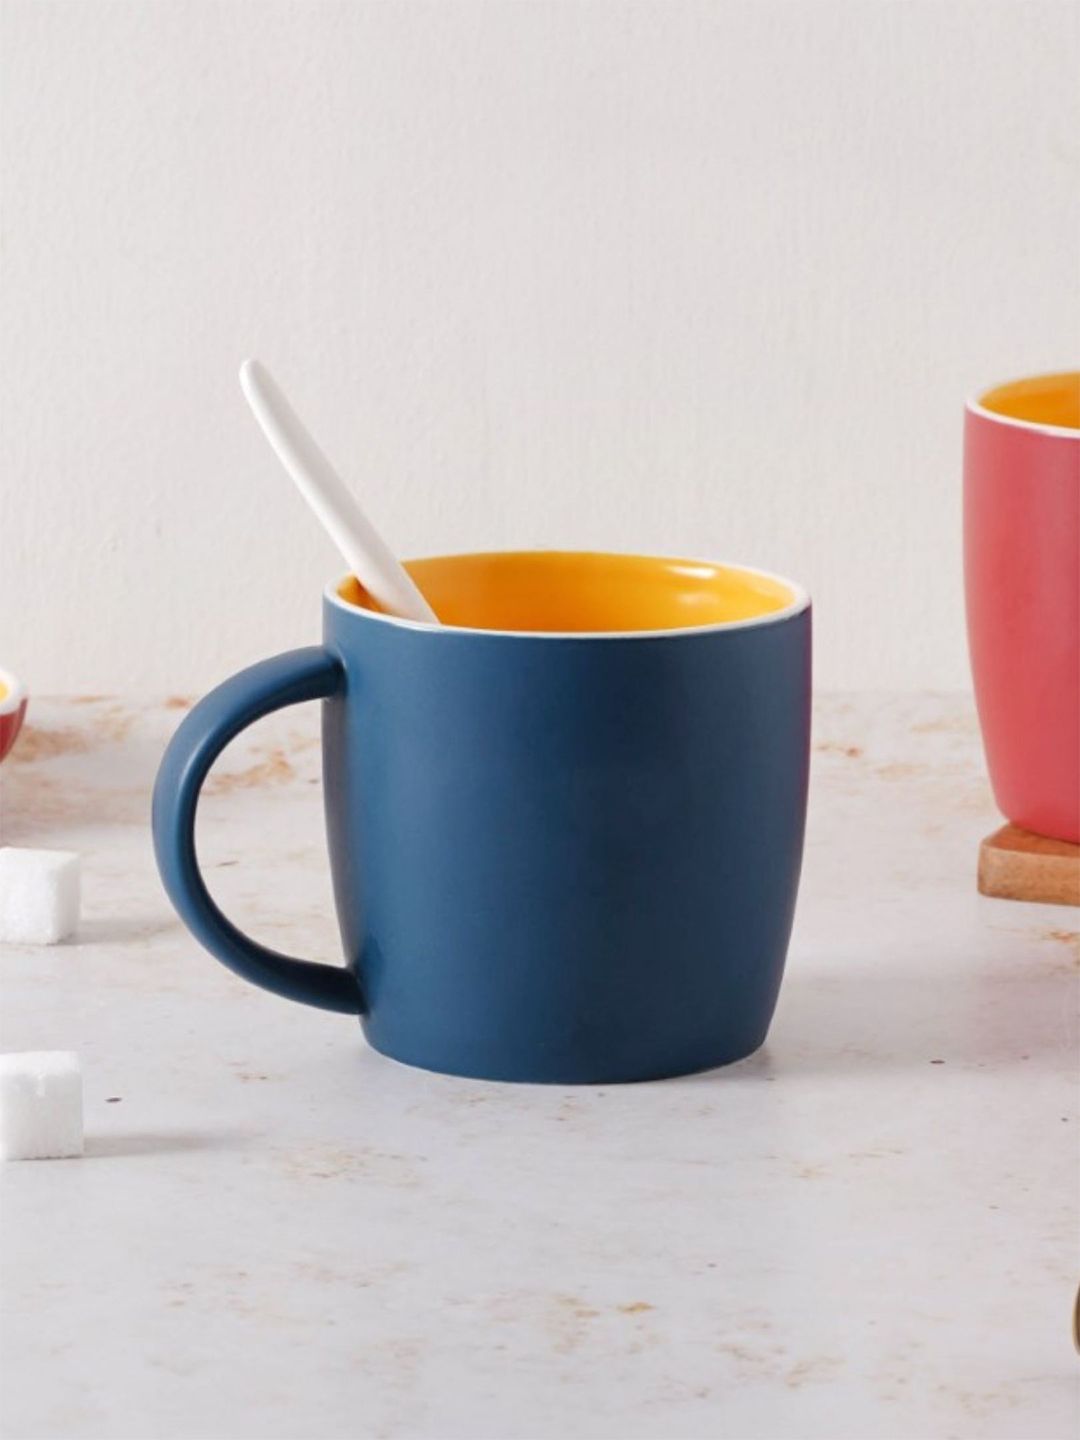 Nestasia Blue and Yellow Ceramic Mug For Coffee Price in India